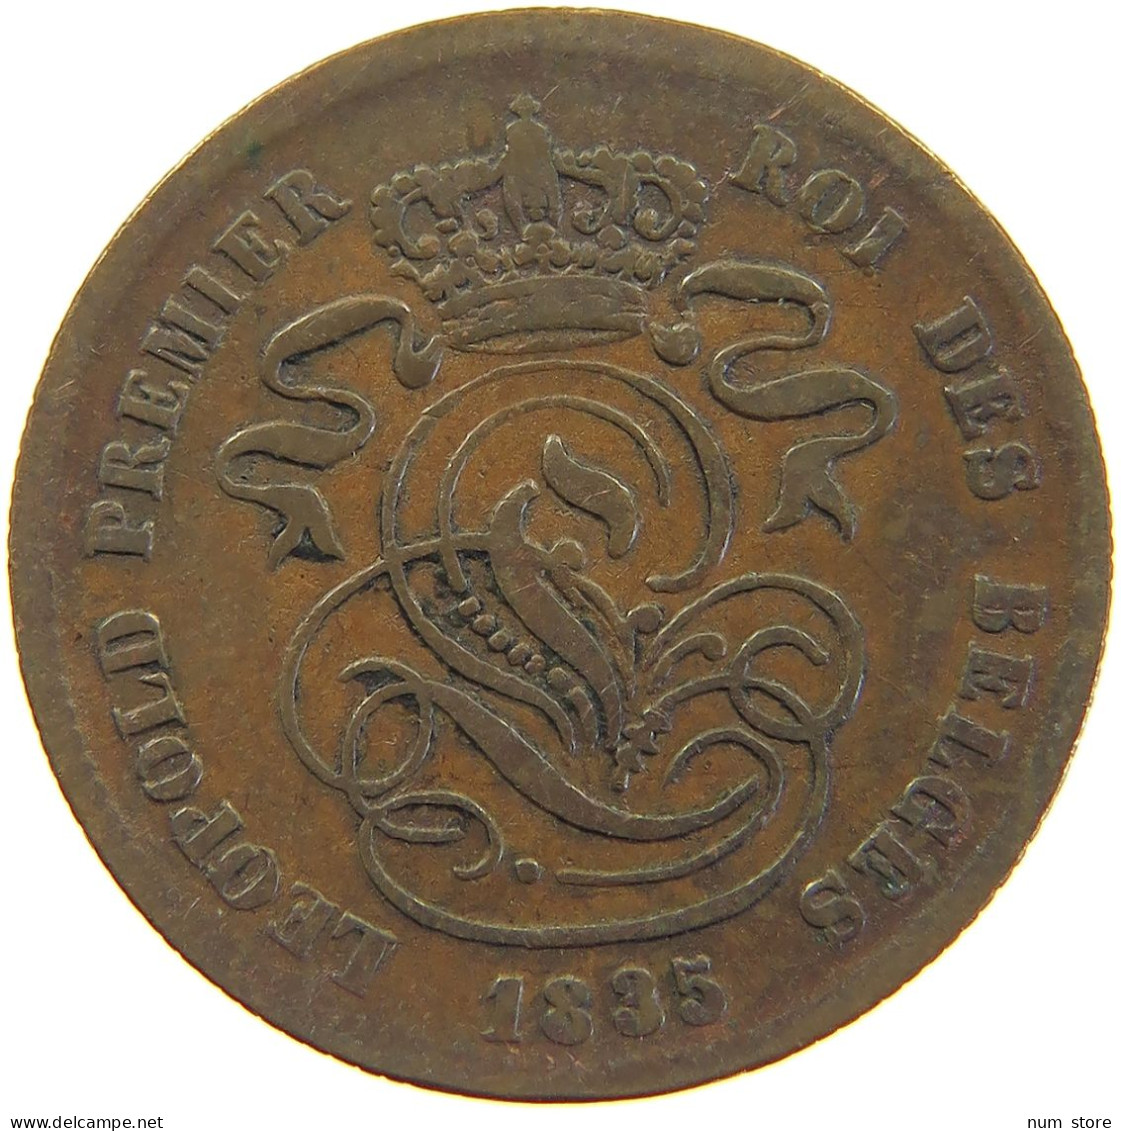 BELGIUM 2 CENTIMES 1835 Leopold I. (1831-1865) 2 CENTIMES 1835 STRUCK OVER NETHERLANDS CENT #c050 0425 - 2 Cent